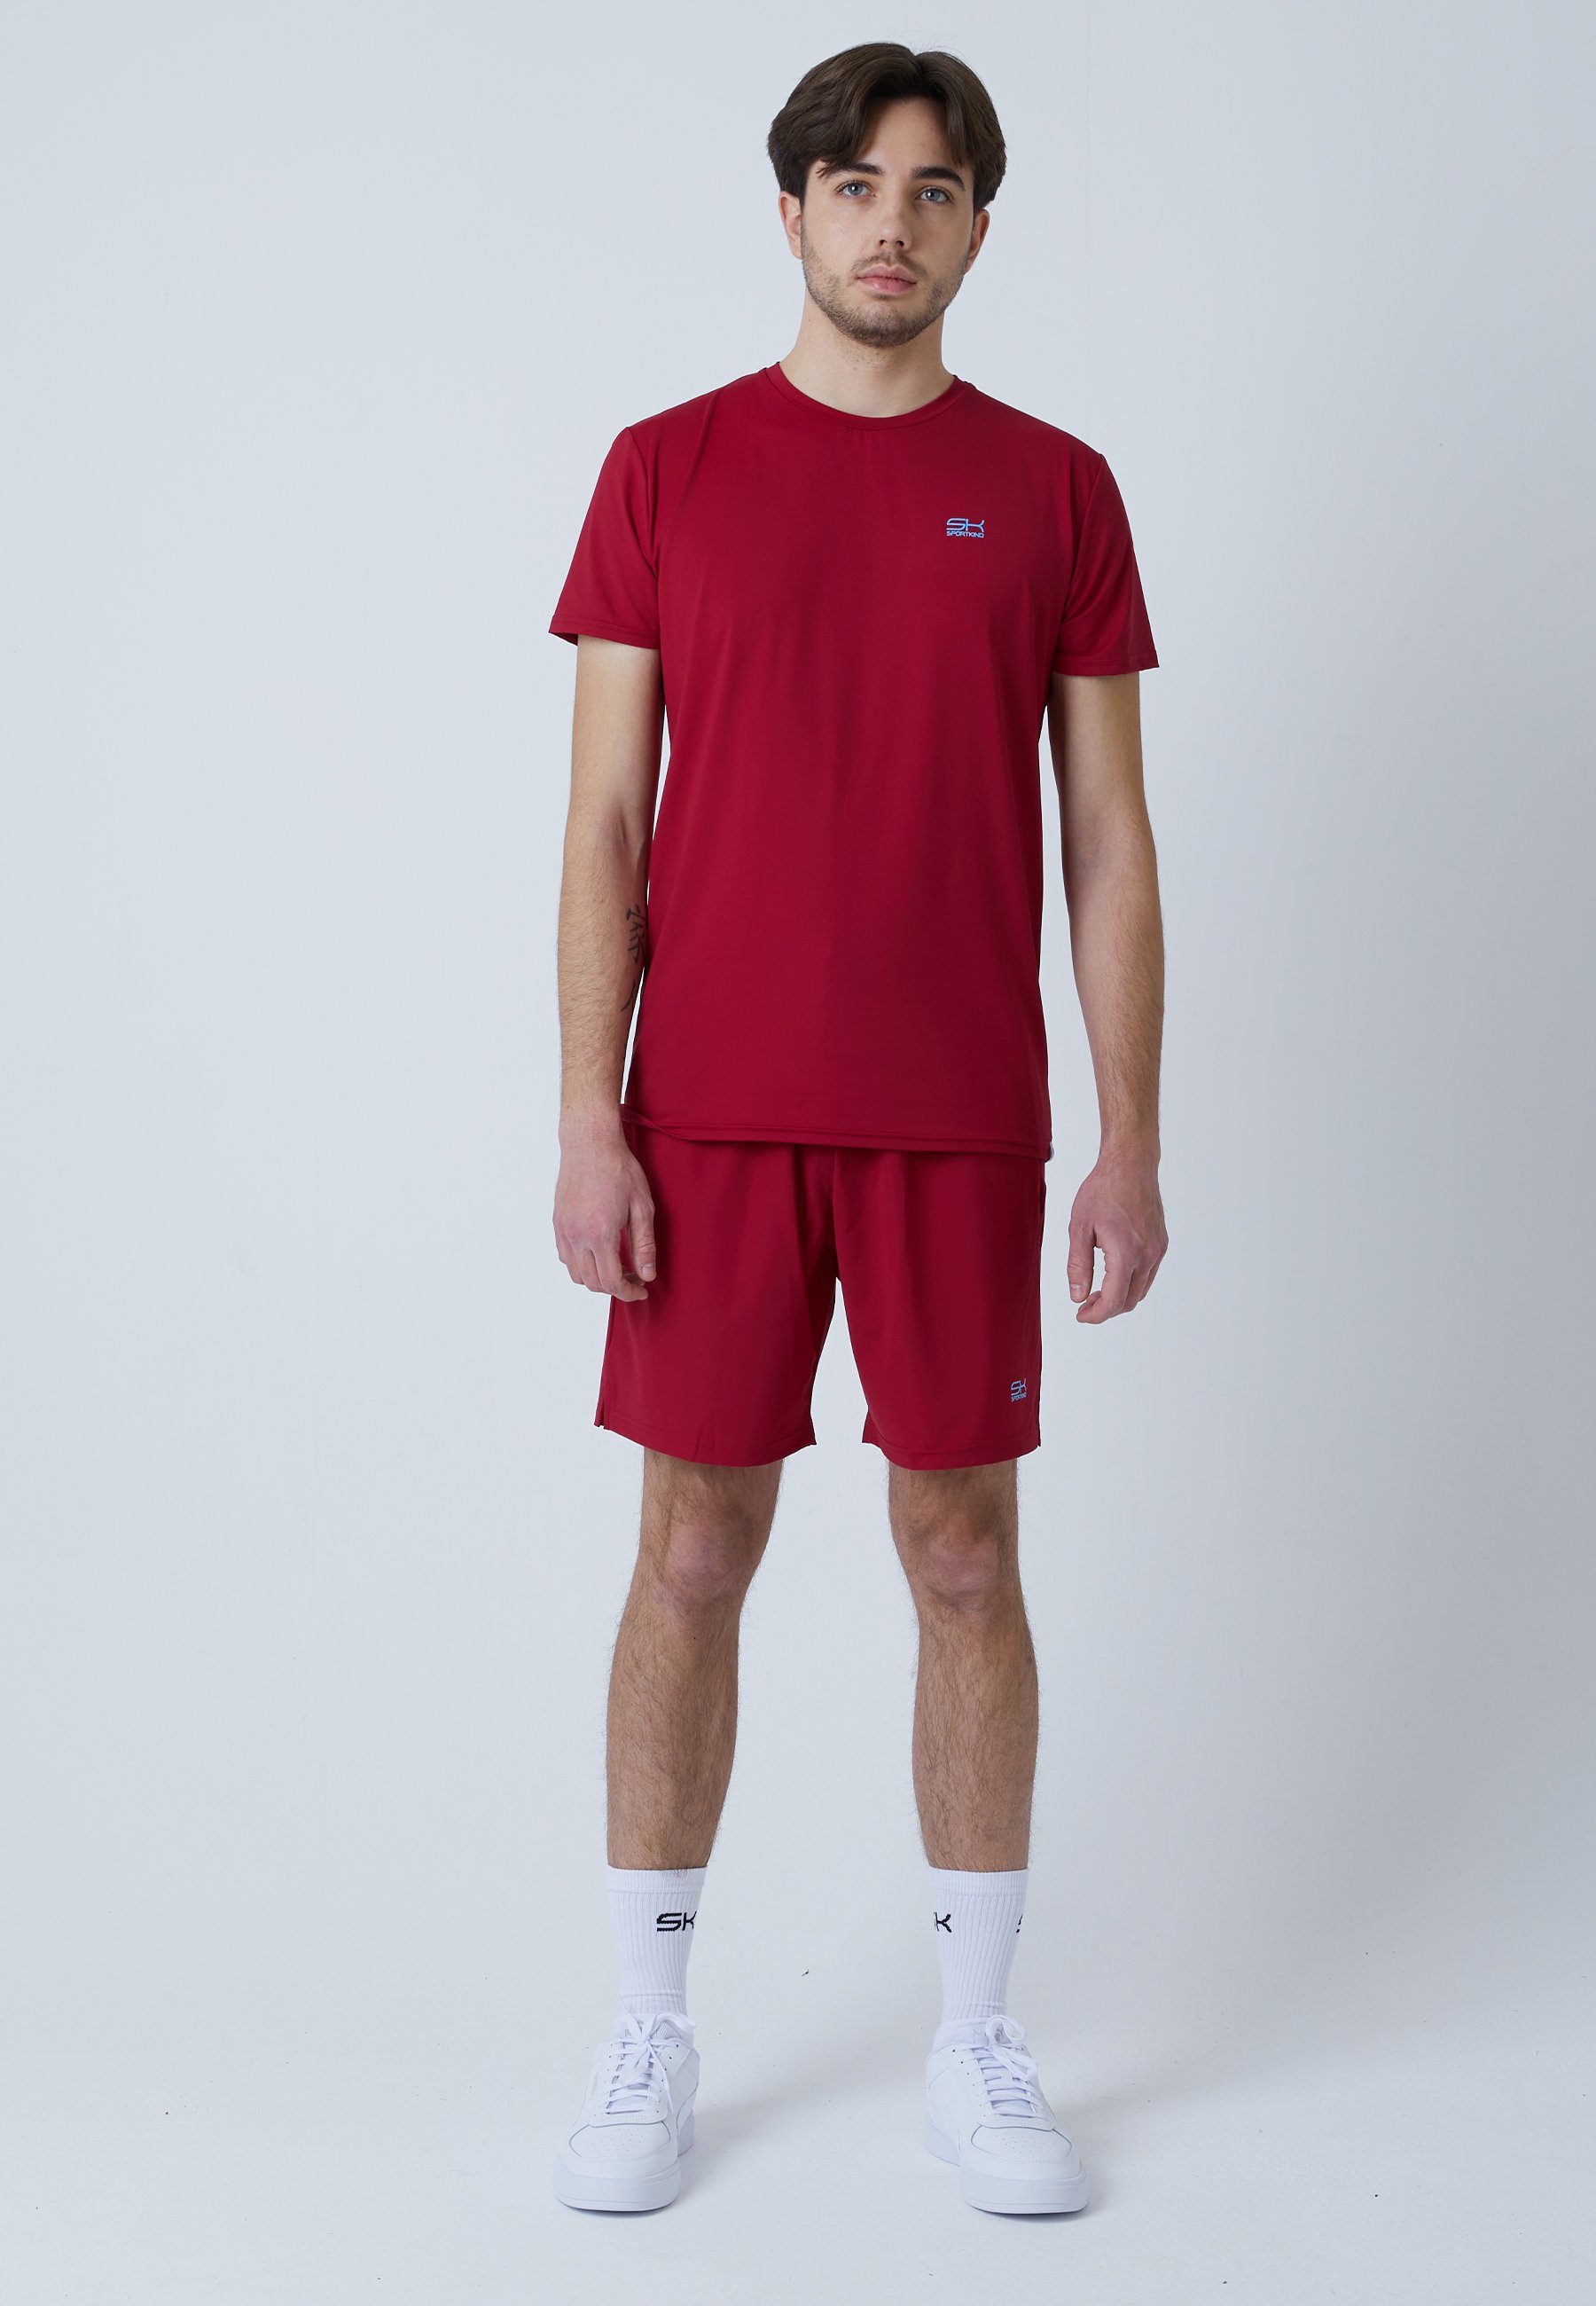 Funktionsshirt Rundhals bordeaux Tennis T-Shirt Herren rot SPORTKIND & Jungen